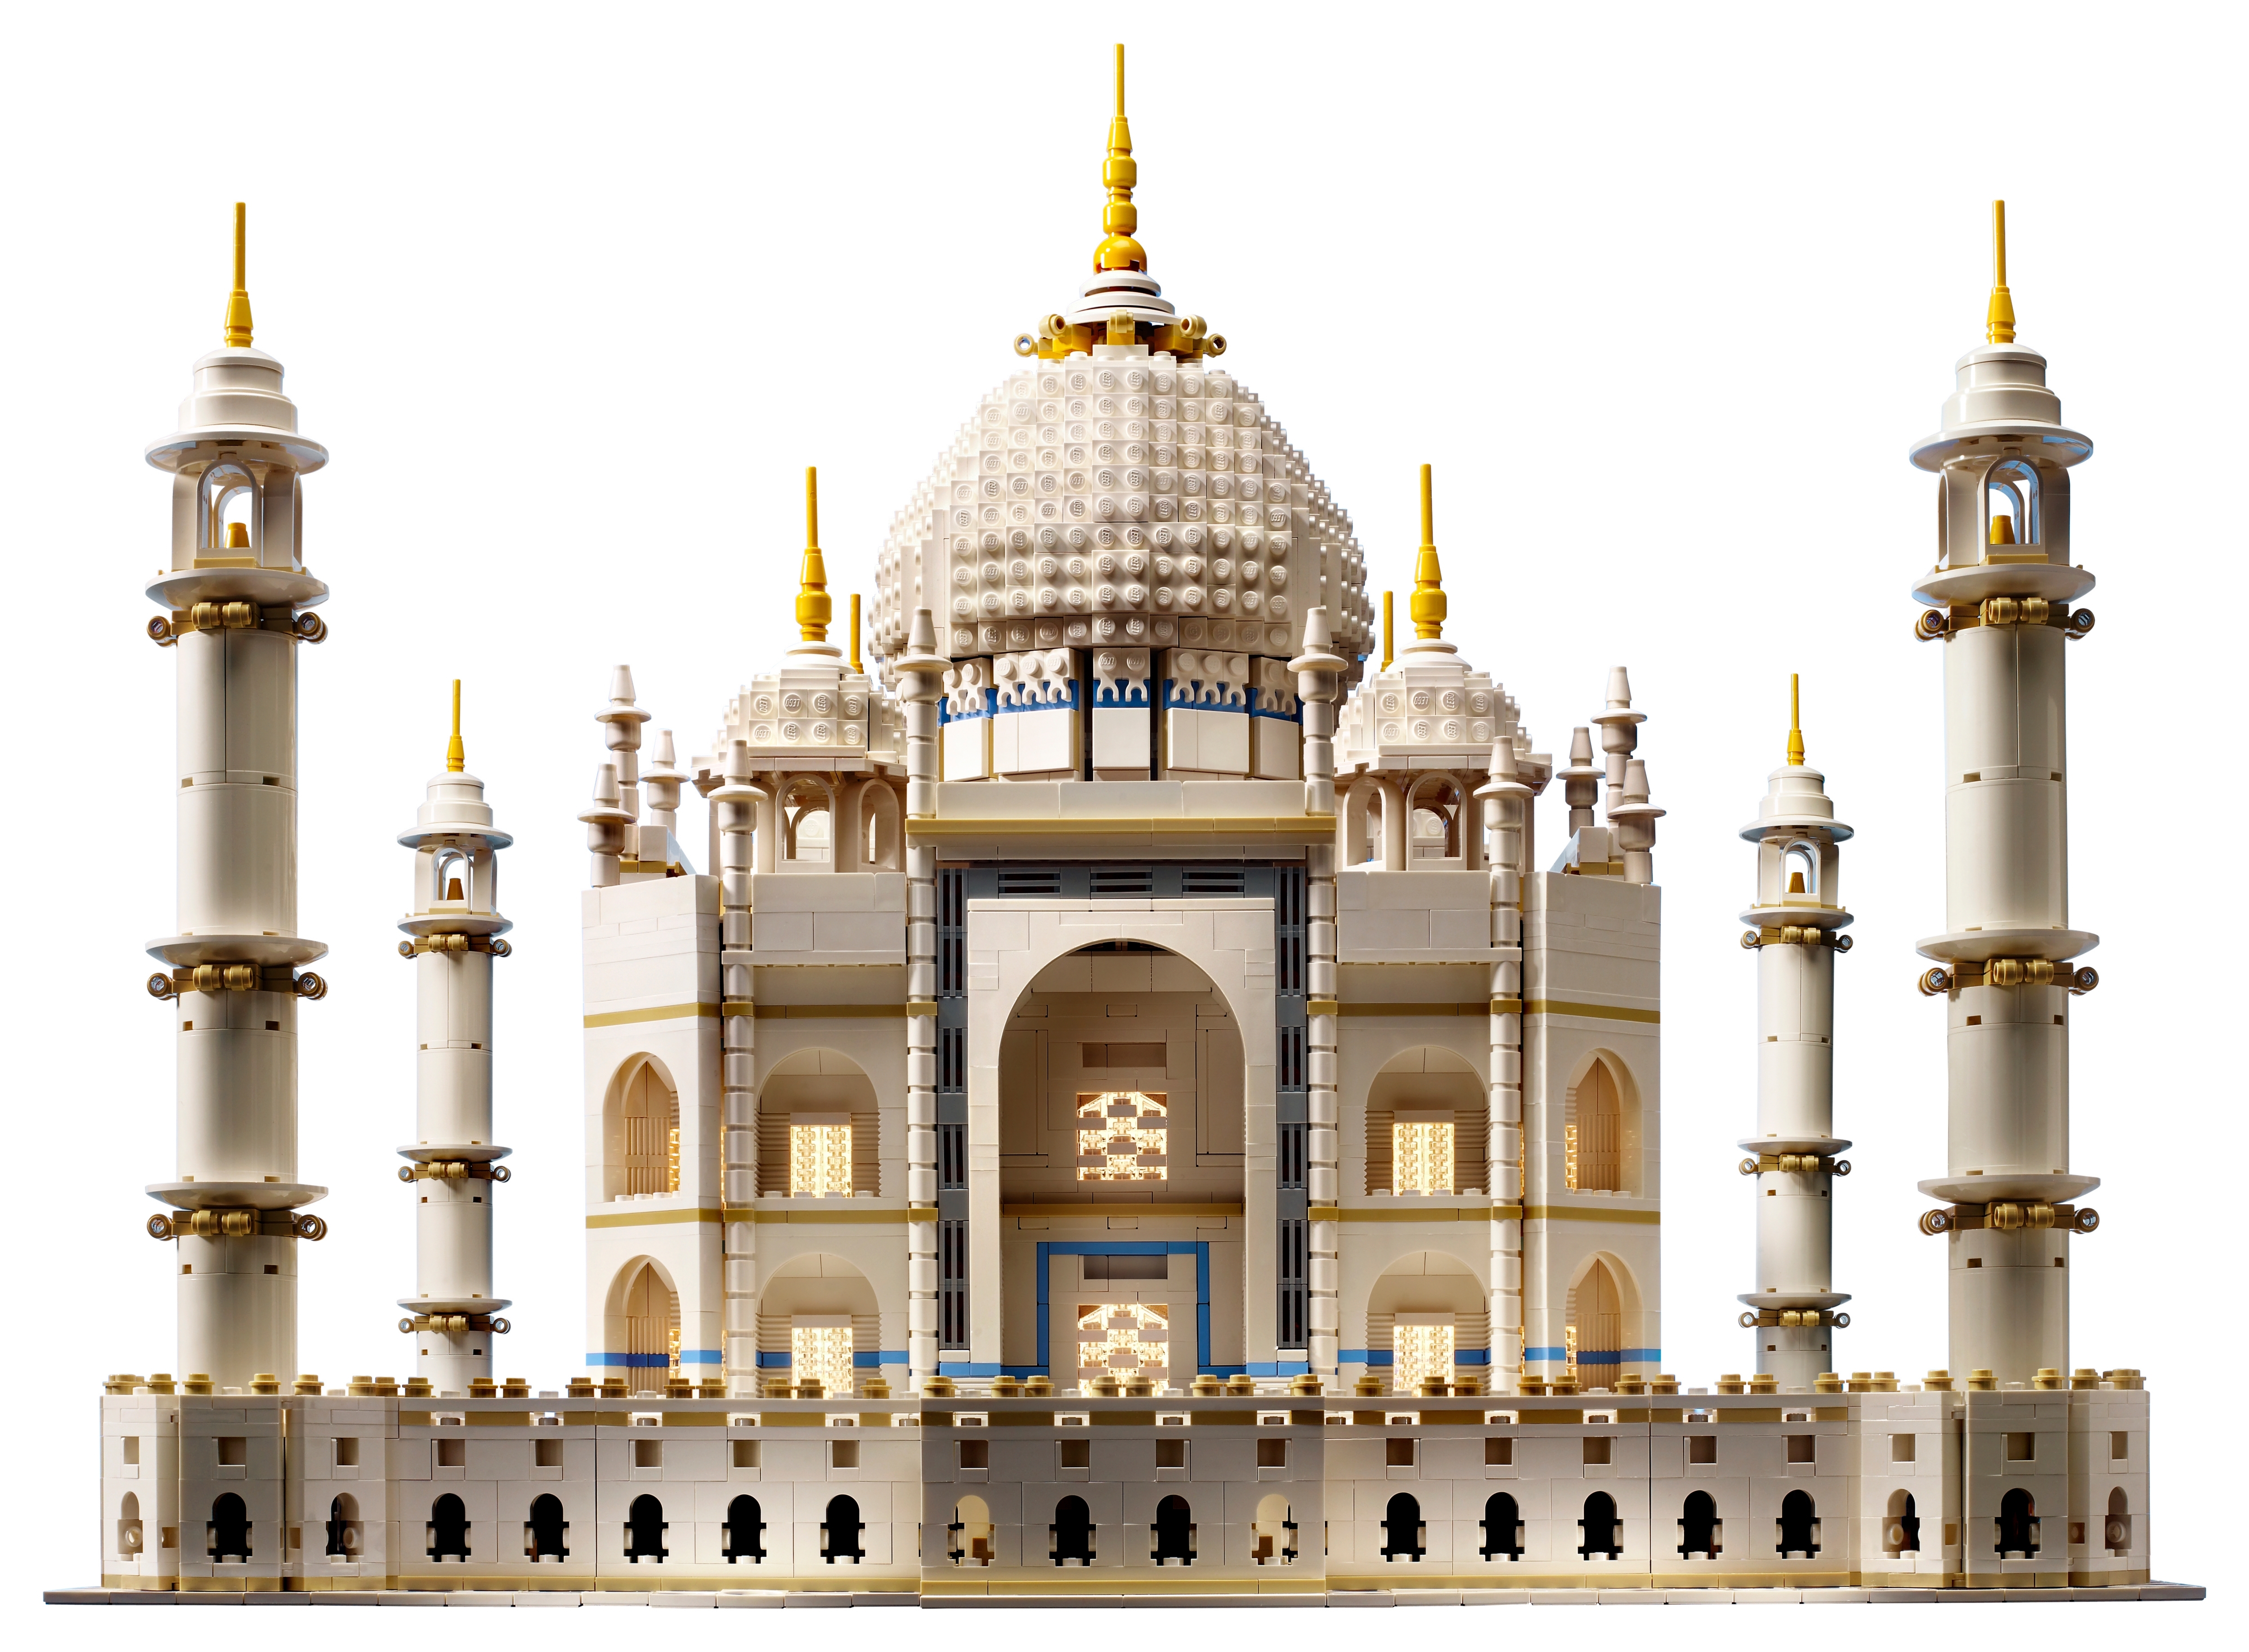 LEGO Creator Expert Taj Mahal huren